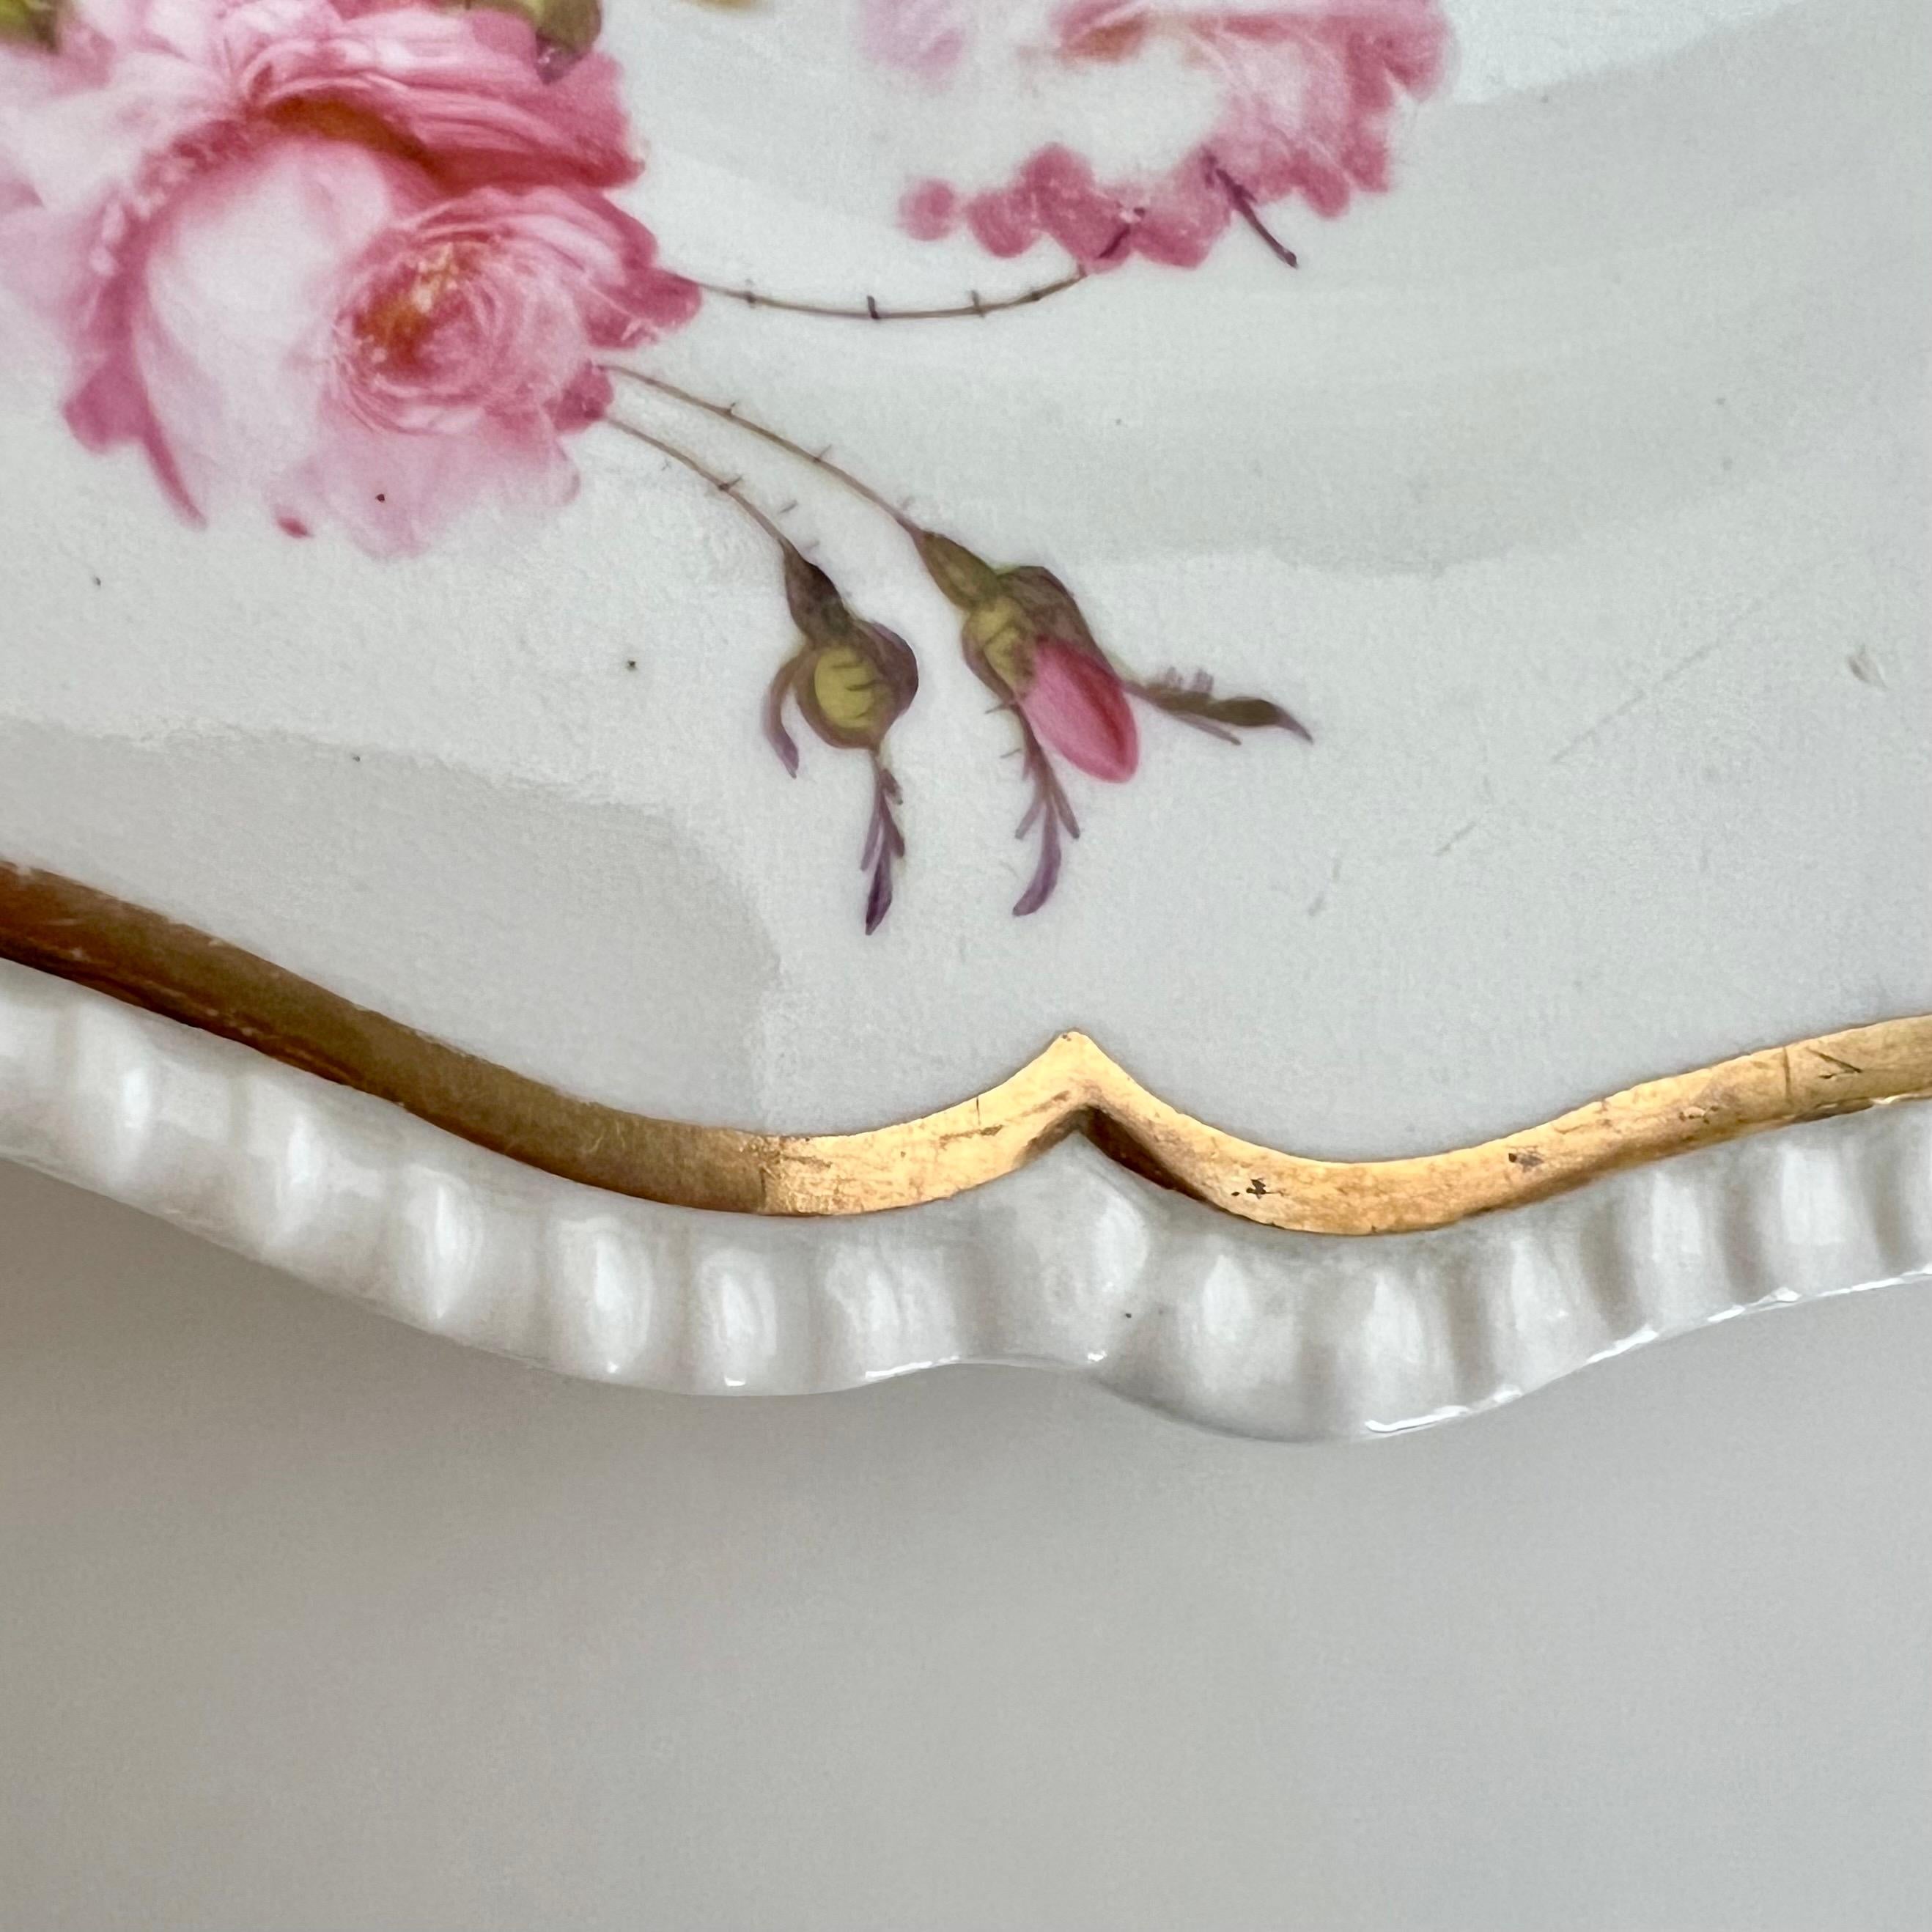 H&R Daniel Porcelain Plate, White, Floral Patt. 3998 Gadrooned, Regency Ca 1824 1